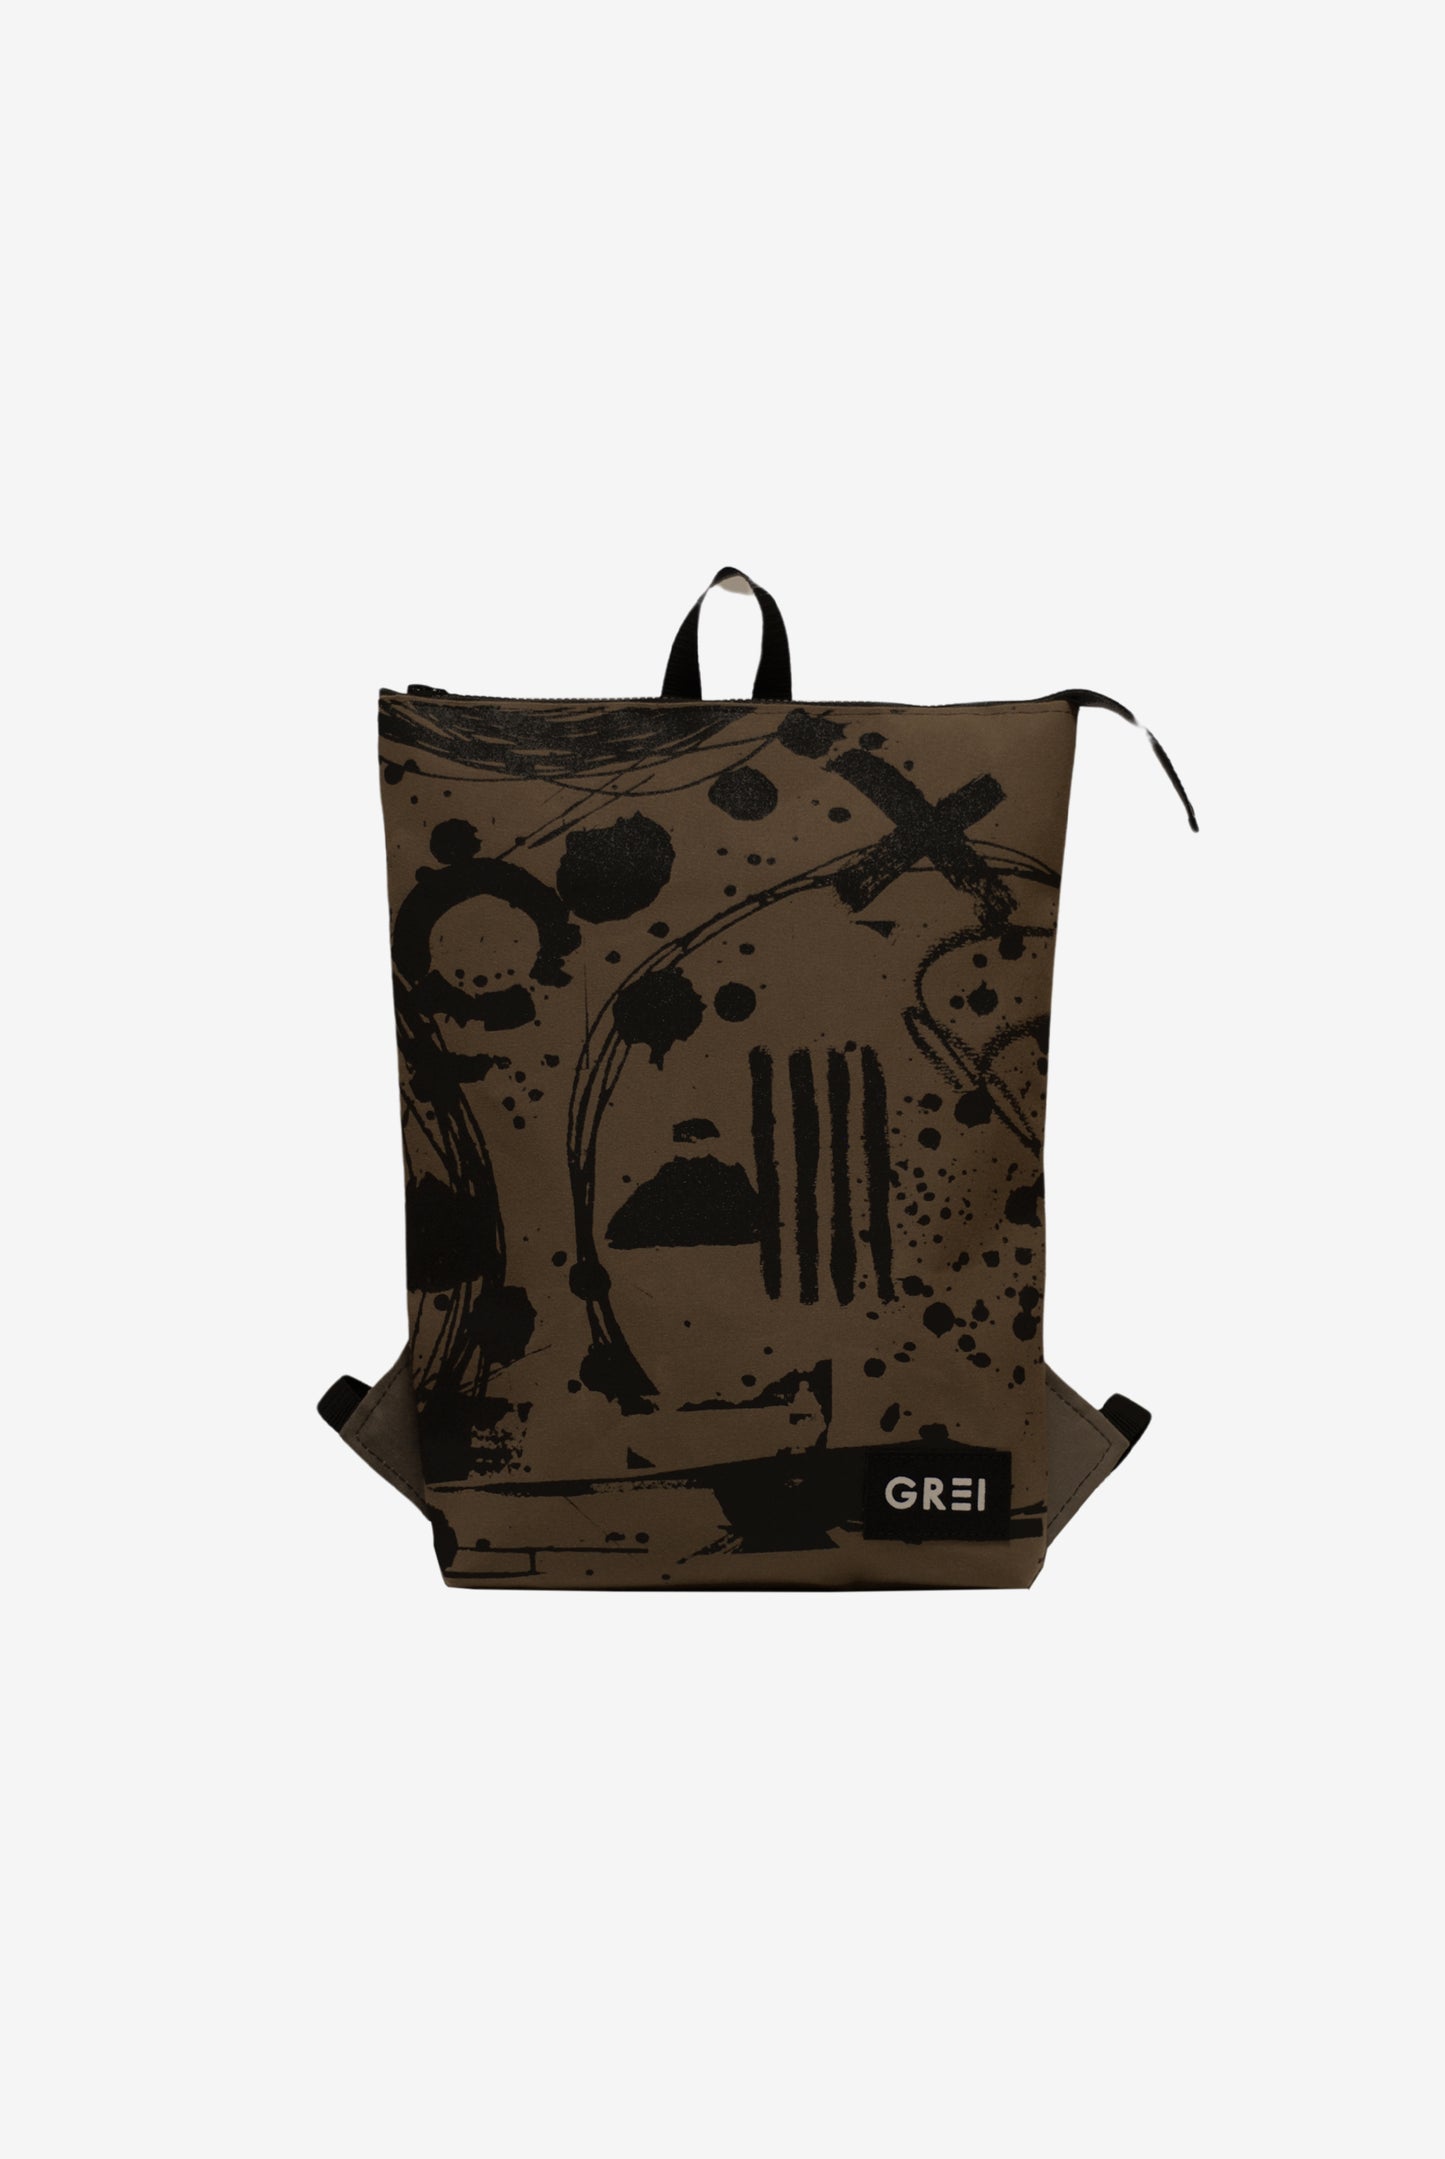 GREI Backpack Crush Brown - Black